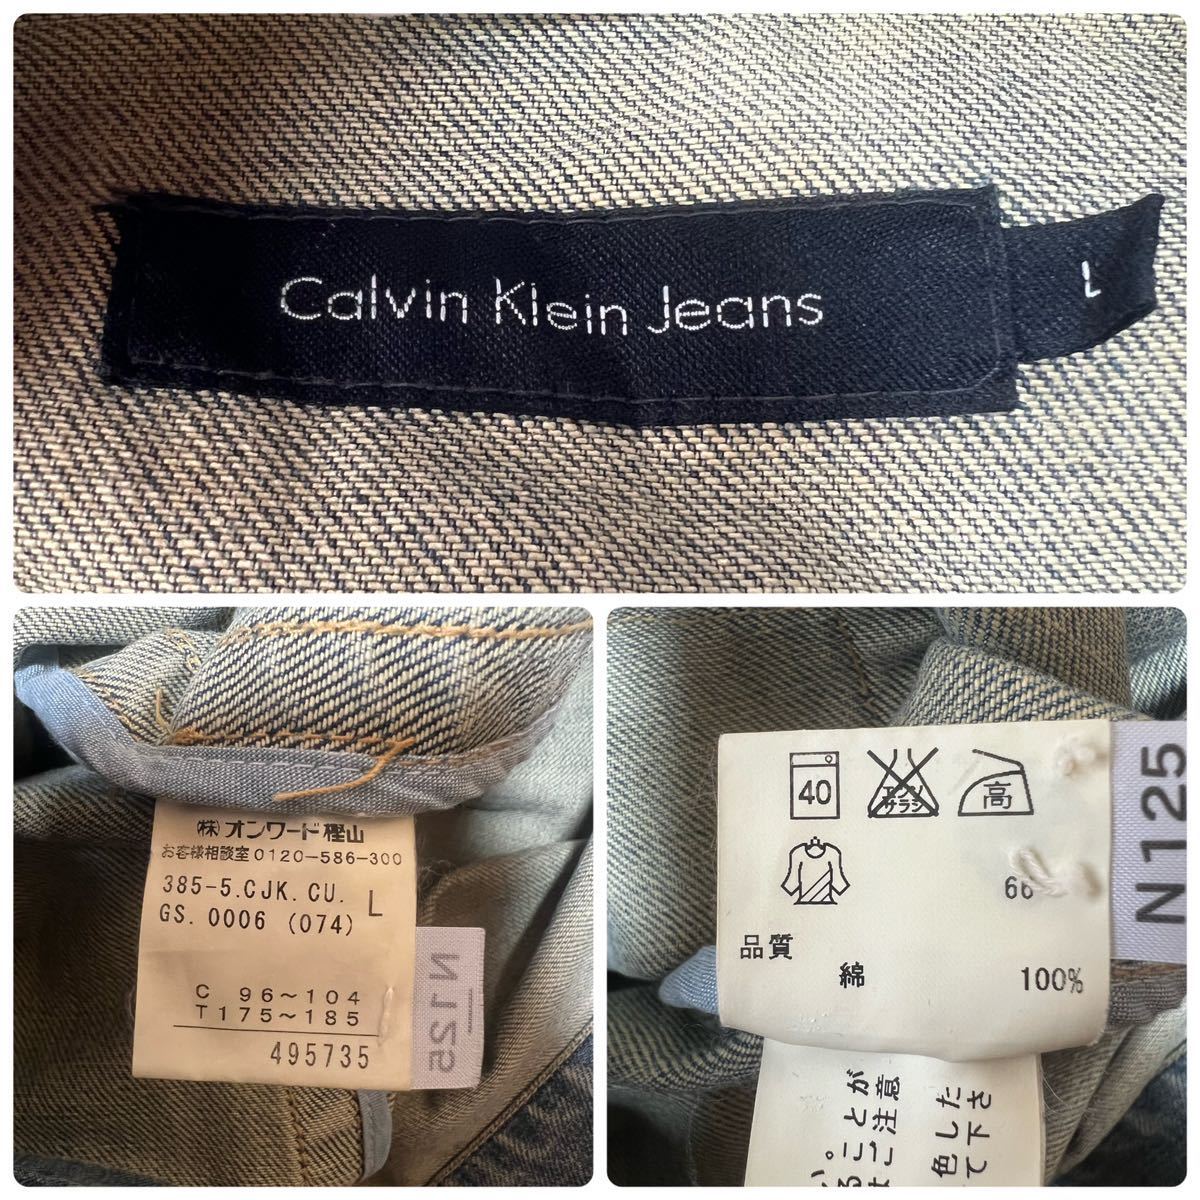 Calvin Klein Jeans Calvin Klein jeans Denim jacket Denim jeans outer garment L